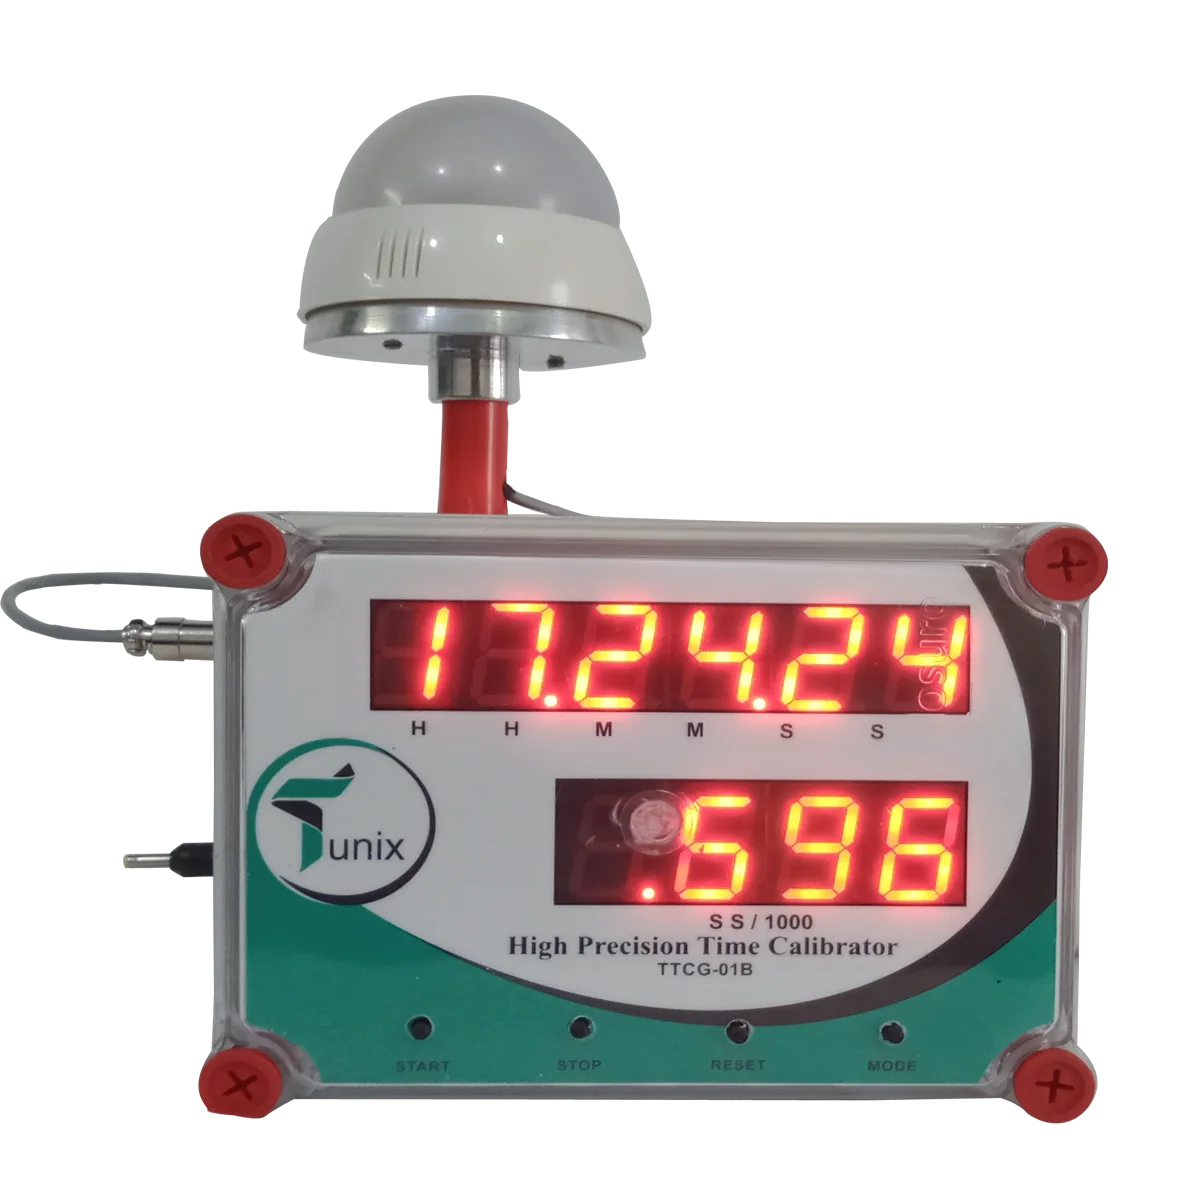 High Precision Timer calibrator